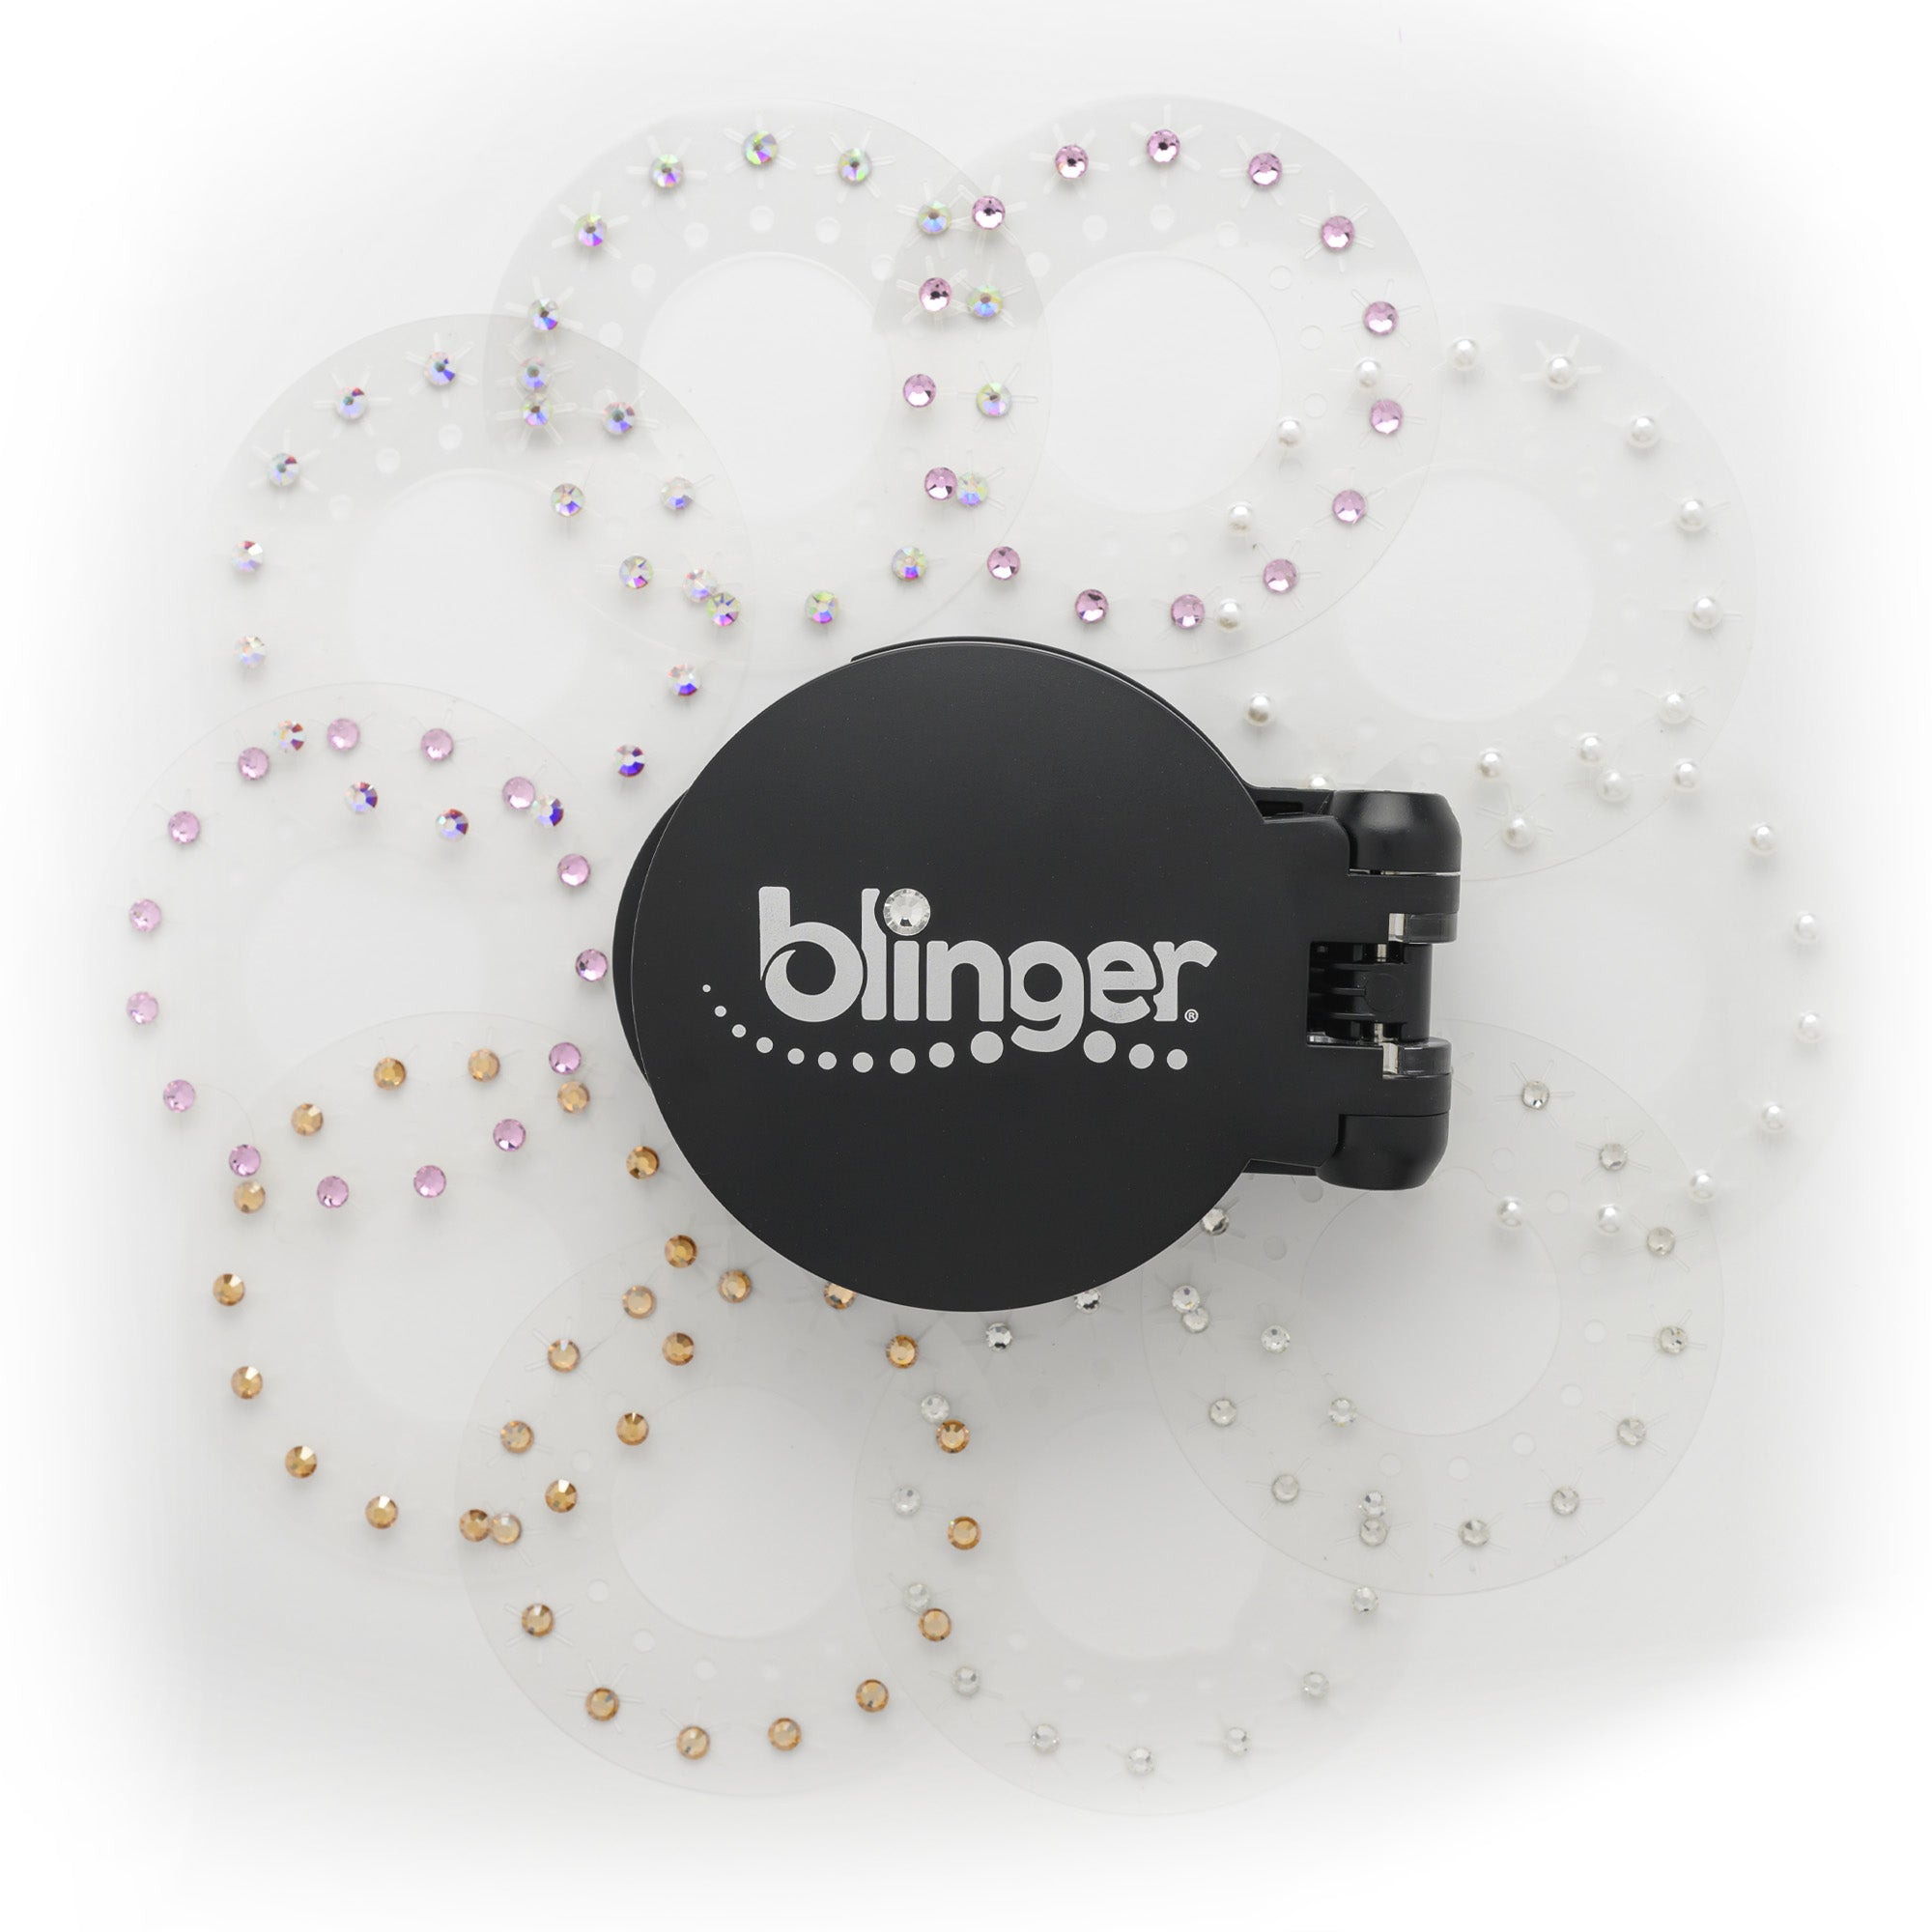 blinger® Vanity Starter Set with blinger® Styling Tool + 150 Precision-Cut Glass Crystals -  blinger.com EXCLUSIVE